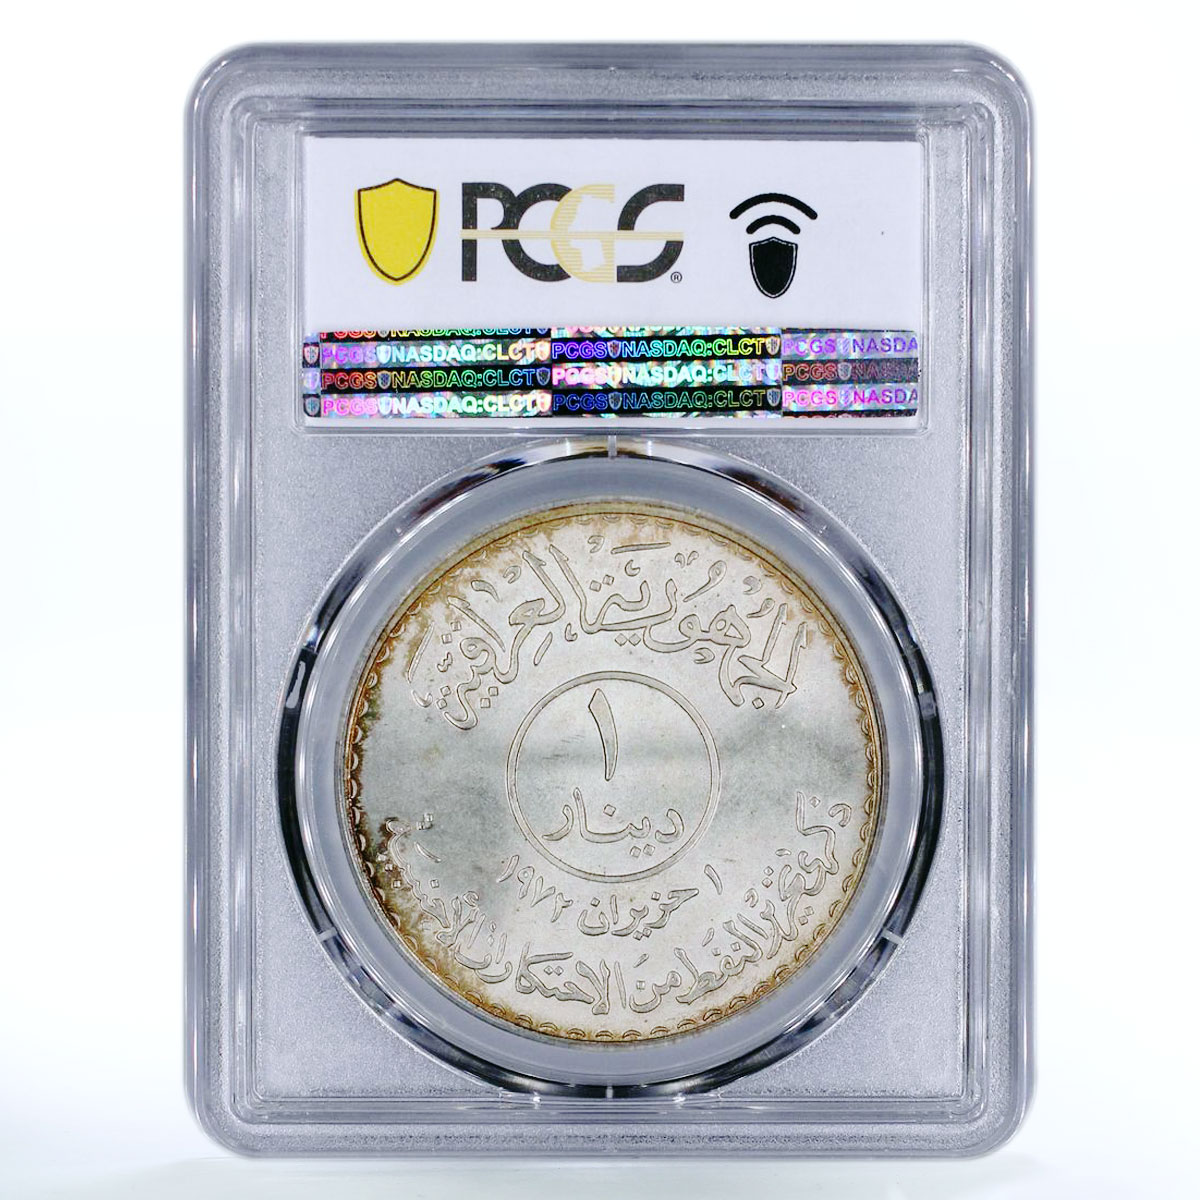 Iraq 1 dinar Oil Nationalization Sun Tanker Ship MS67 PCGS silver coin 1973